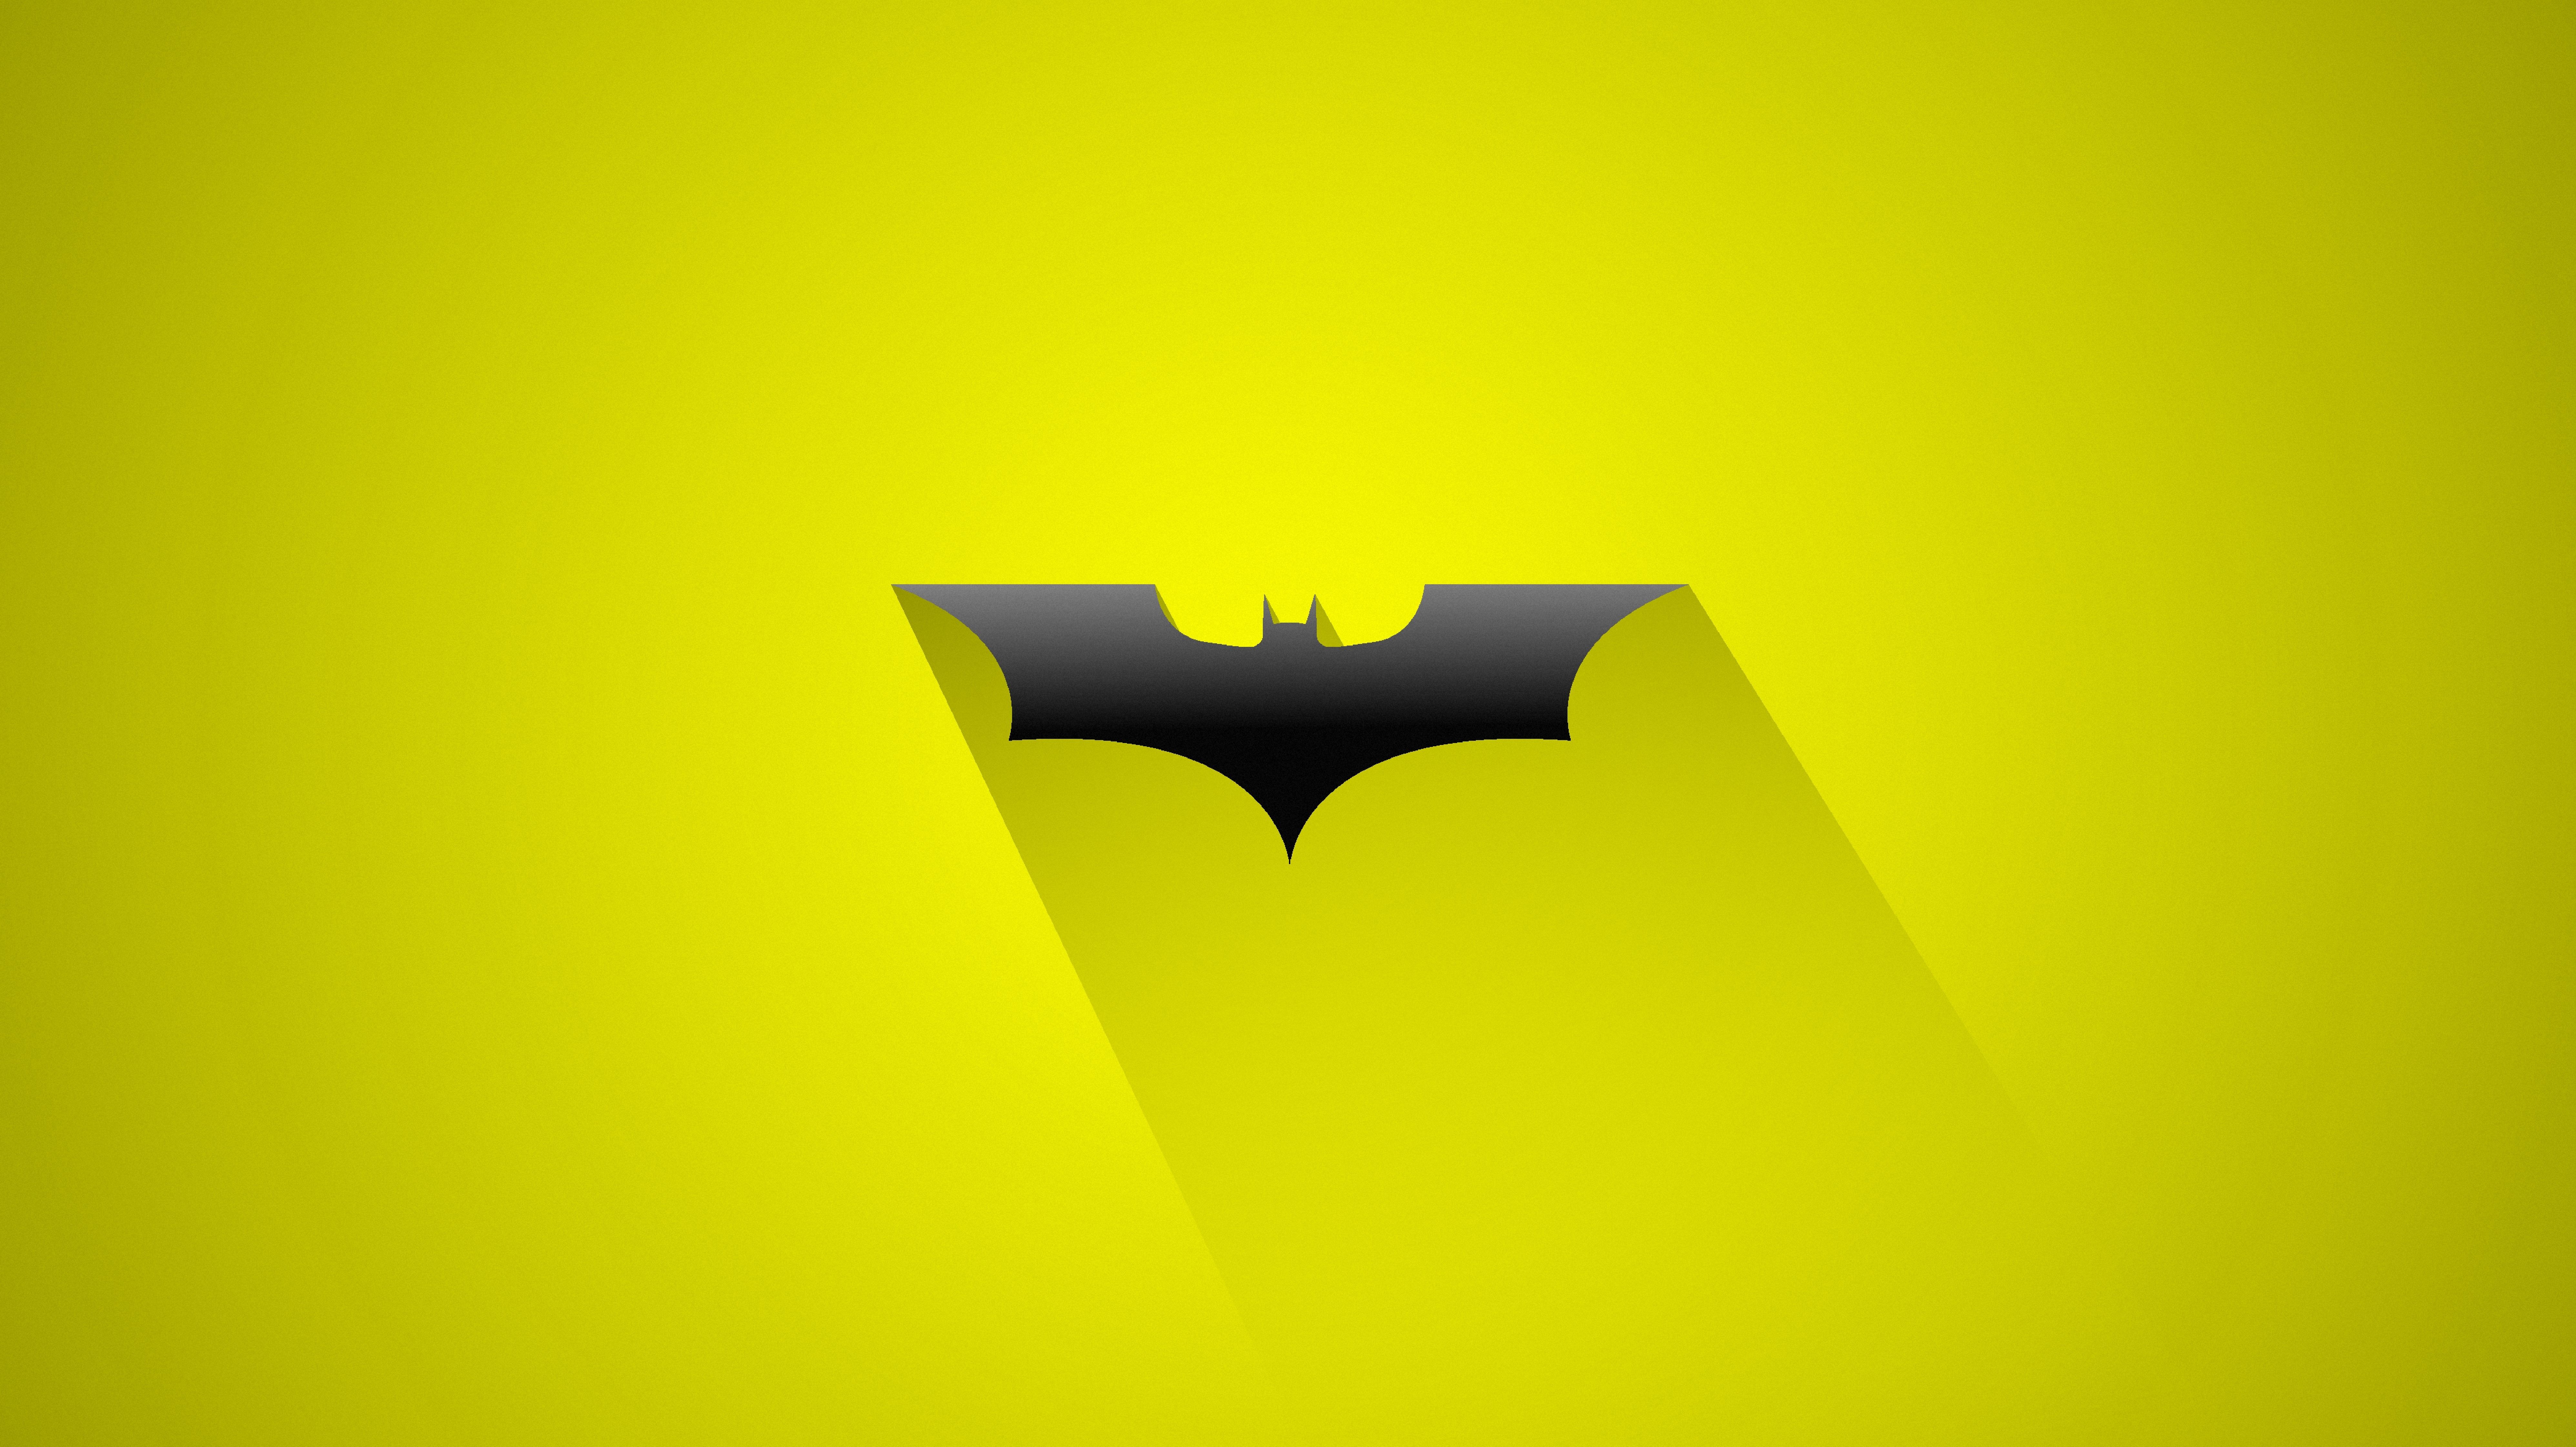 Batman 8K Logo 2560x1080 Resolution Wallpaper, HD